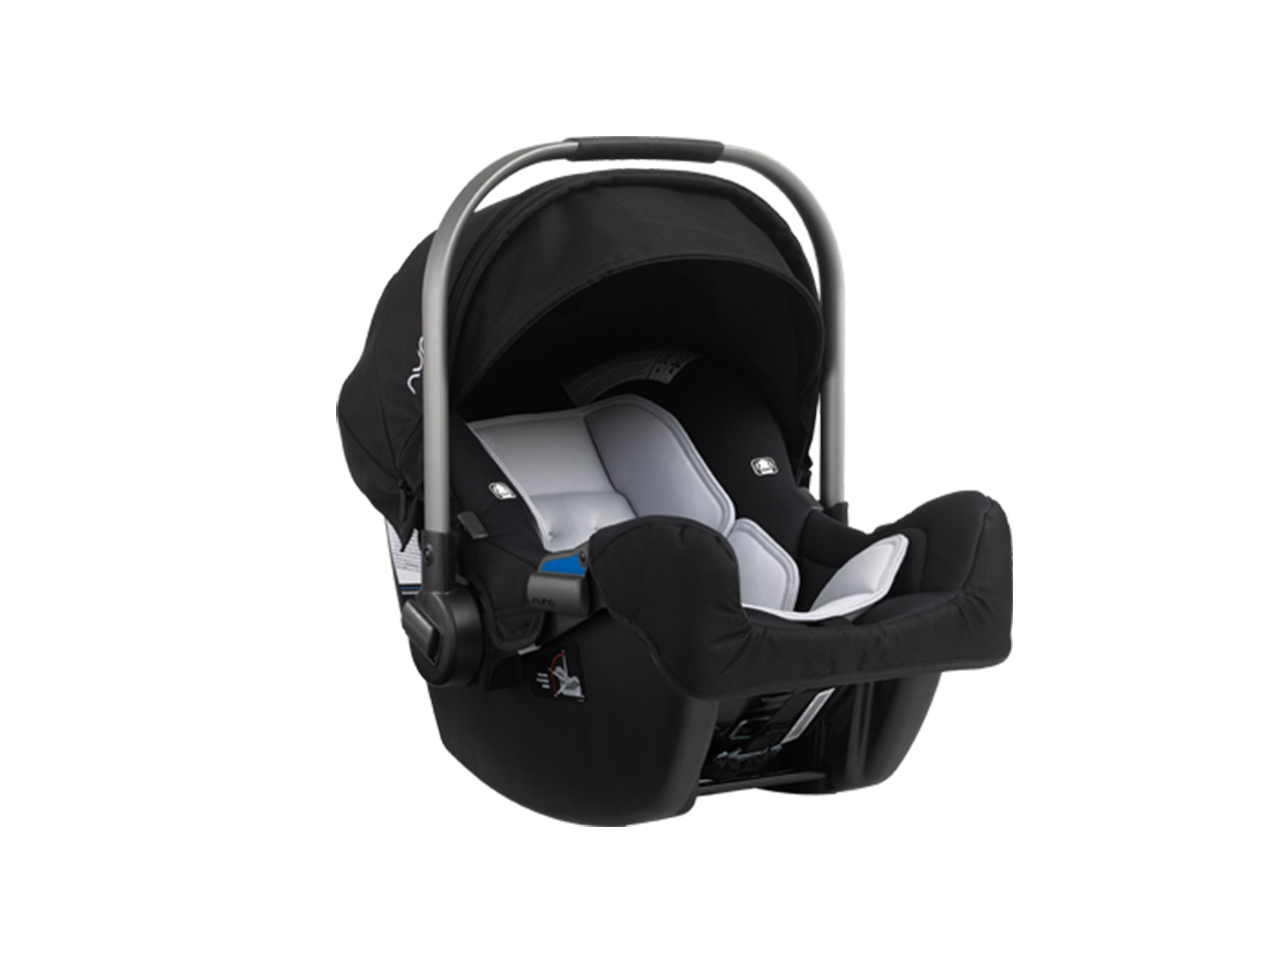 nuna pipa infant car seat reviews